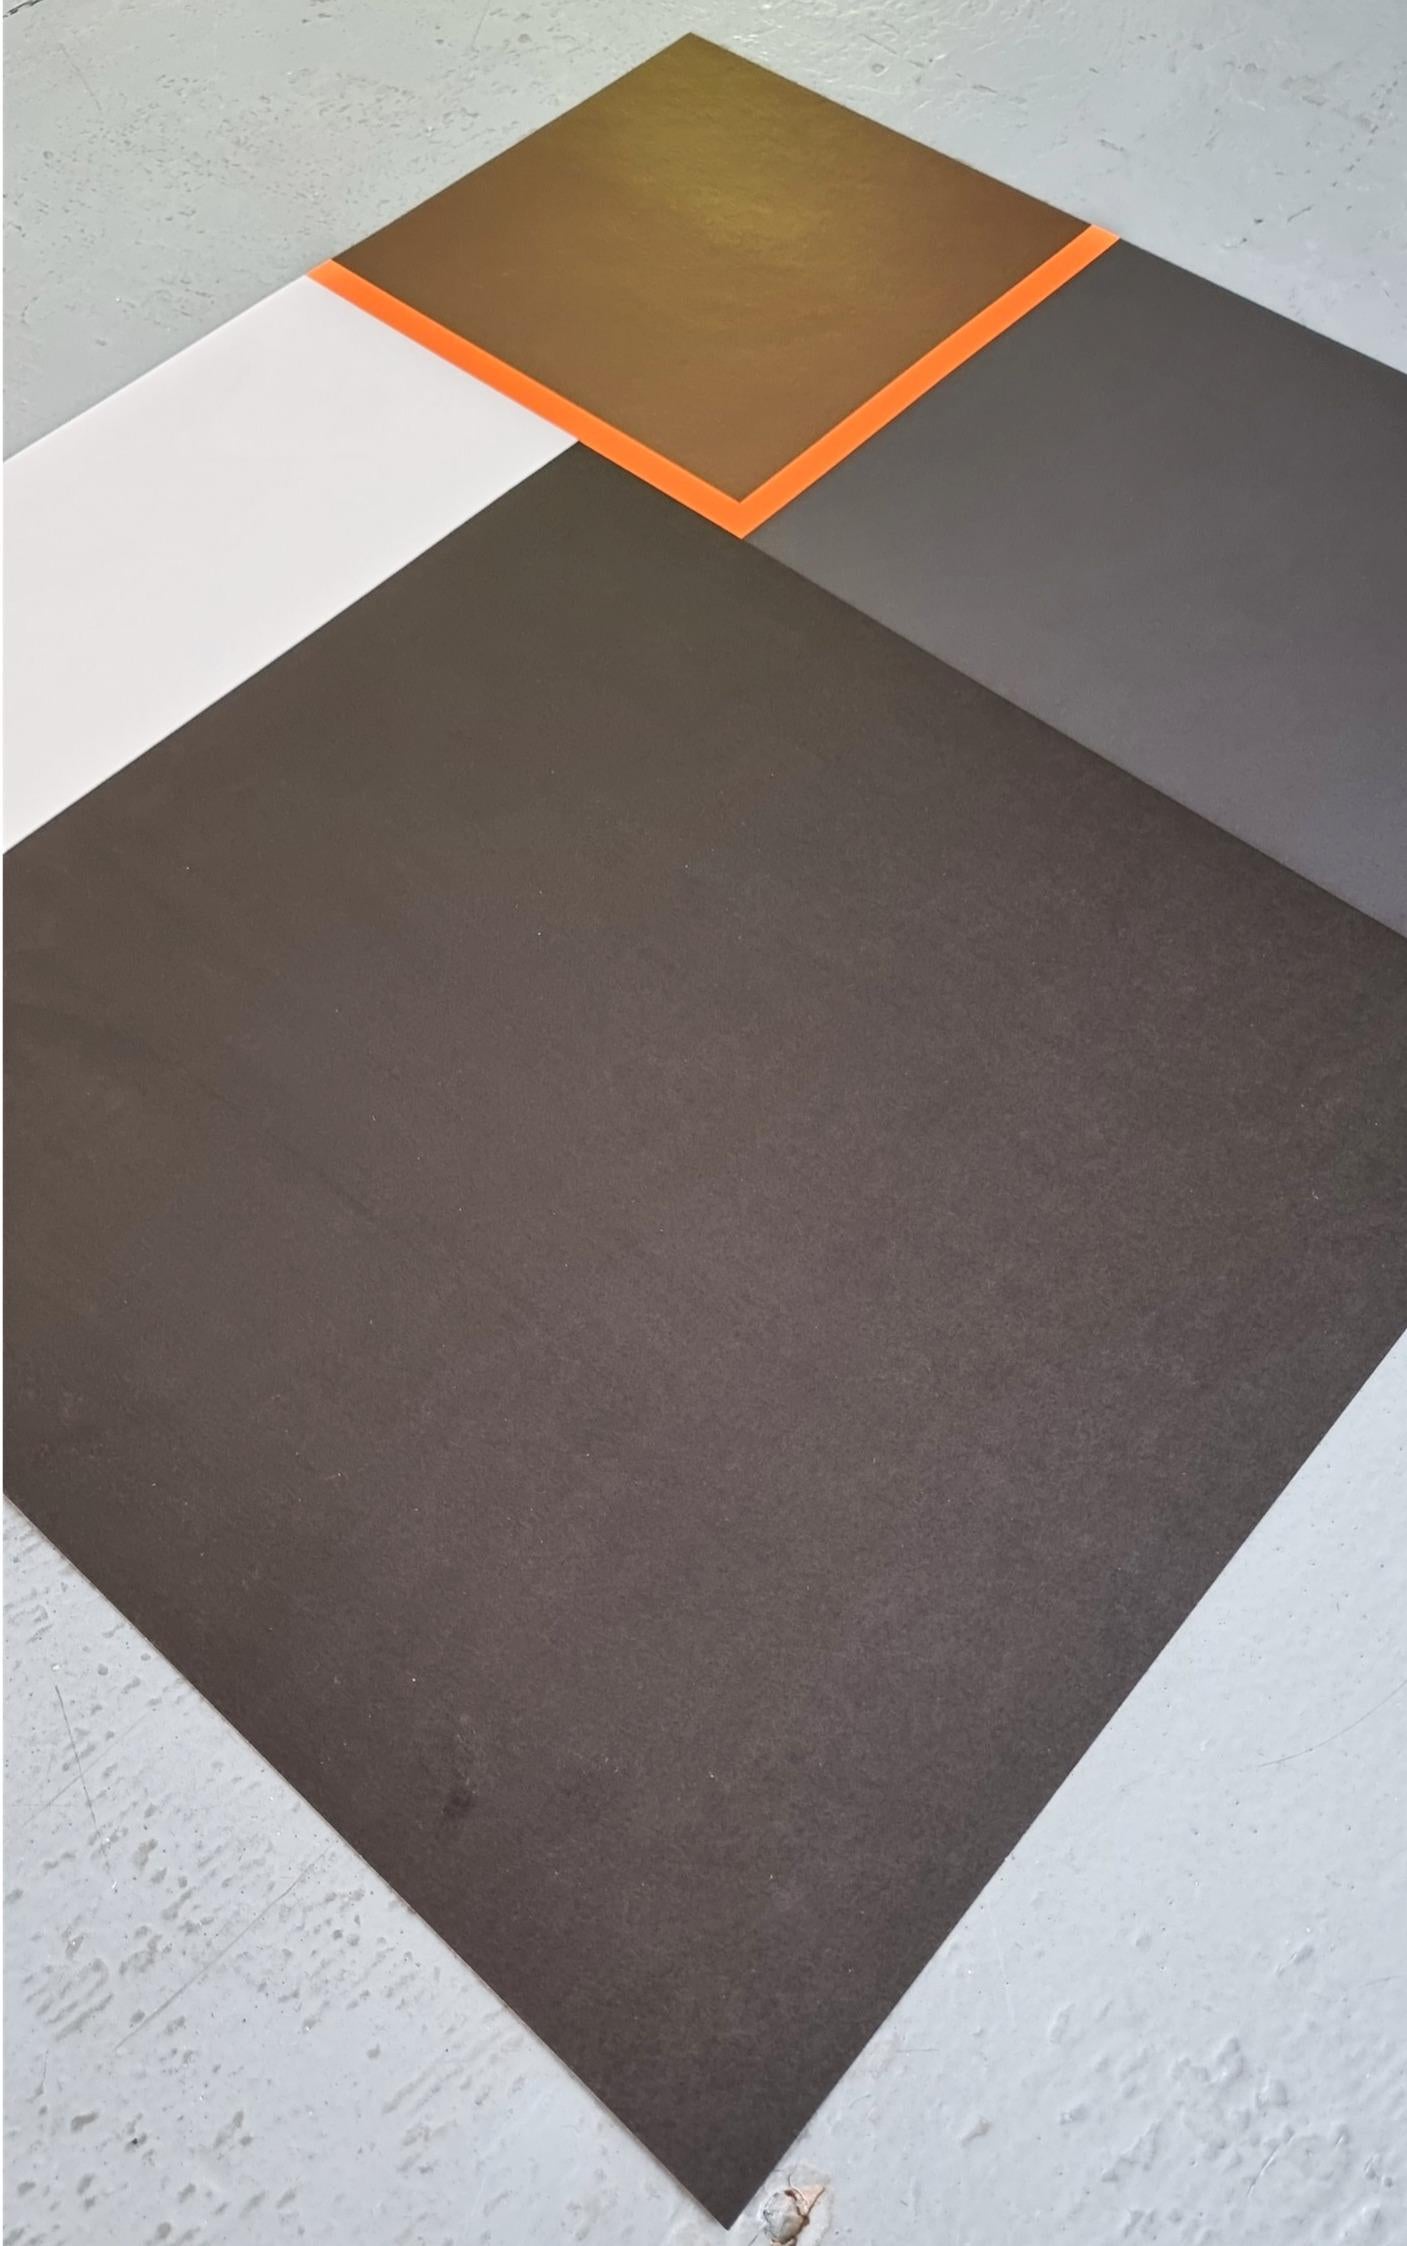 Black Ray - Abstract Geometric Print by Richard Schur